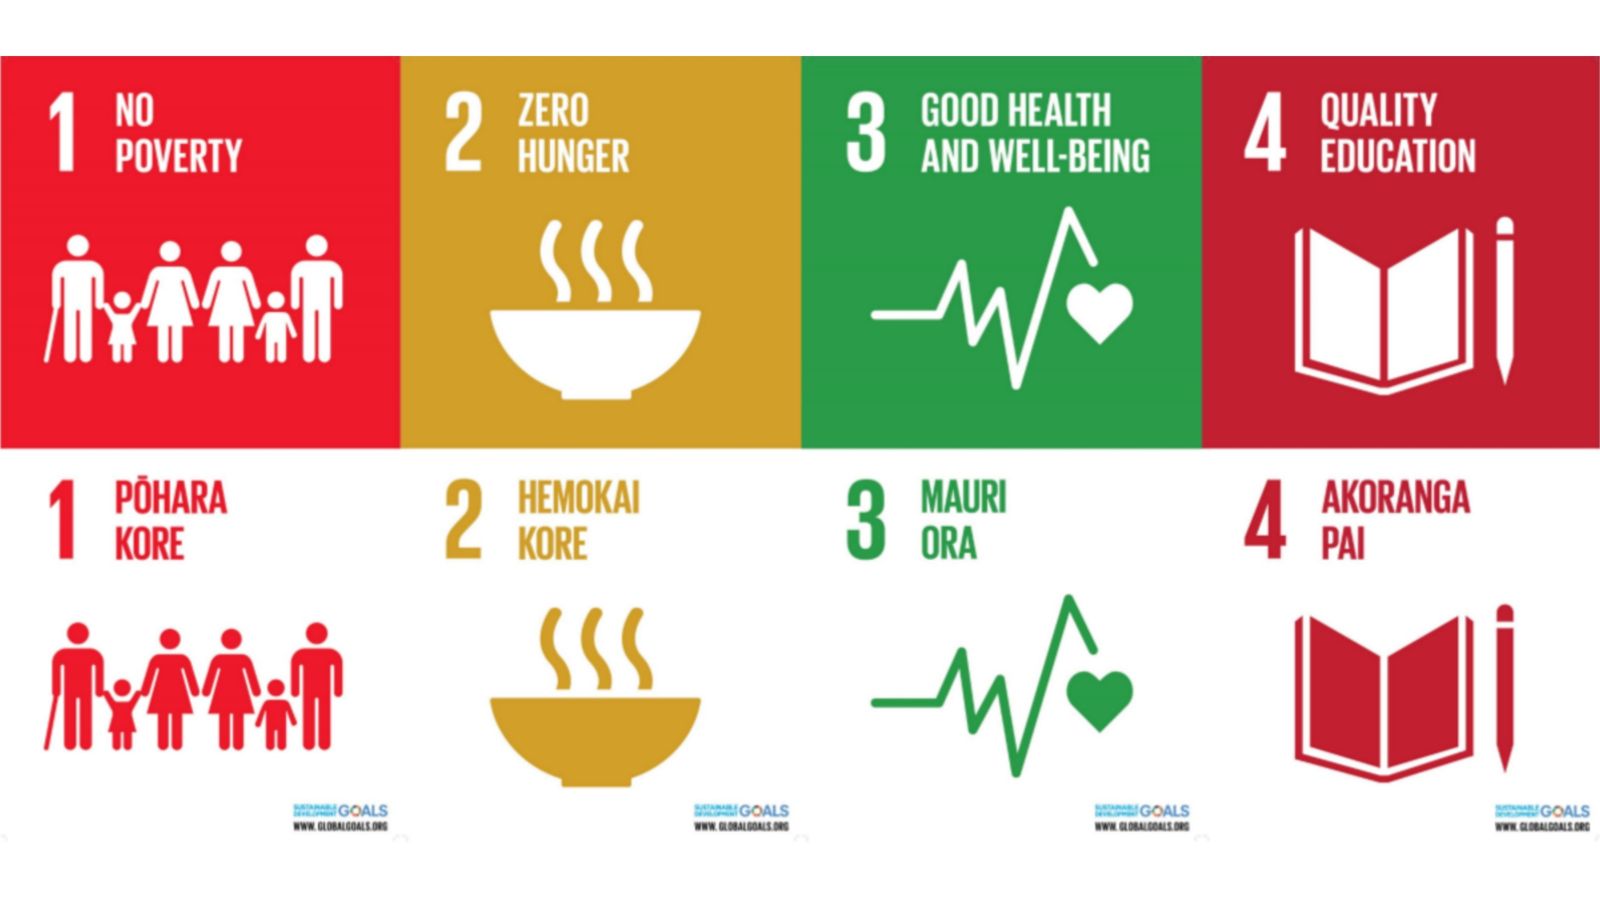 Graphic of four SDGs translated into Maori